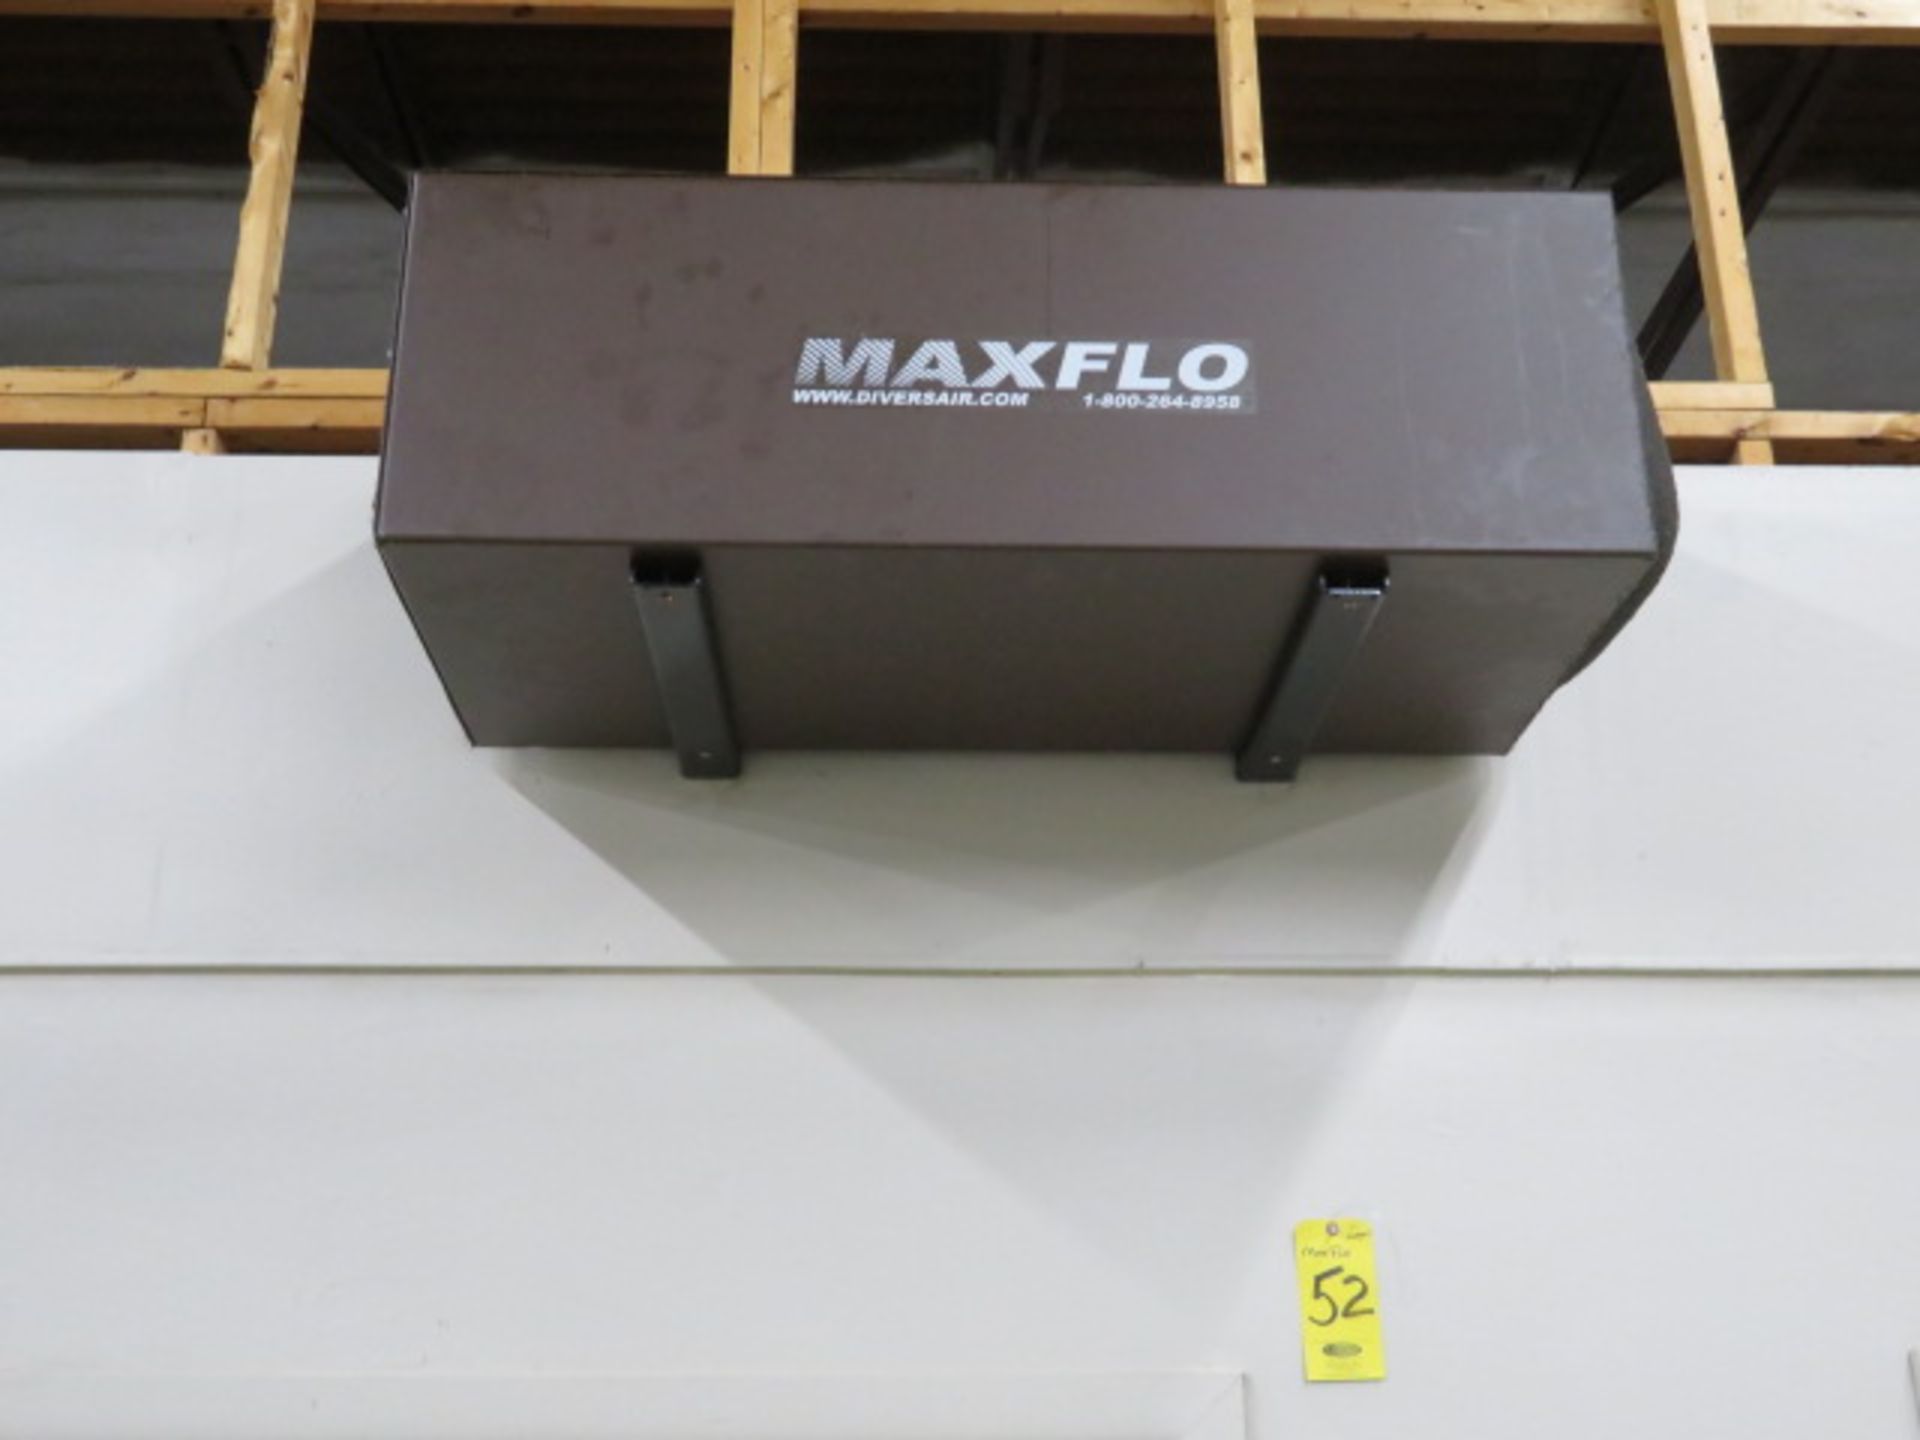 WALL-MOUNTED MAXFLO AIR PURIFIER